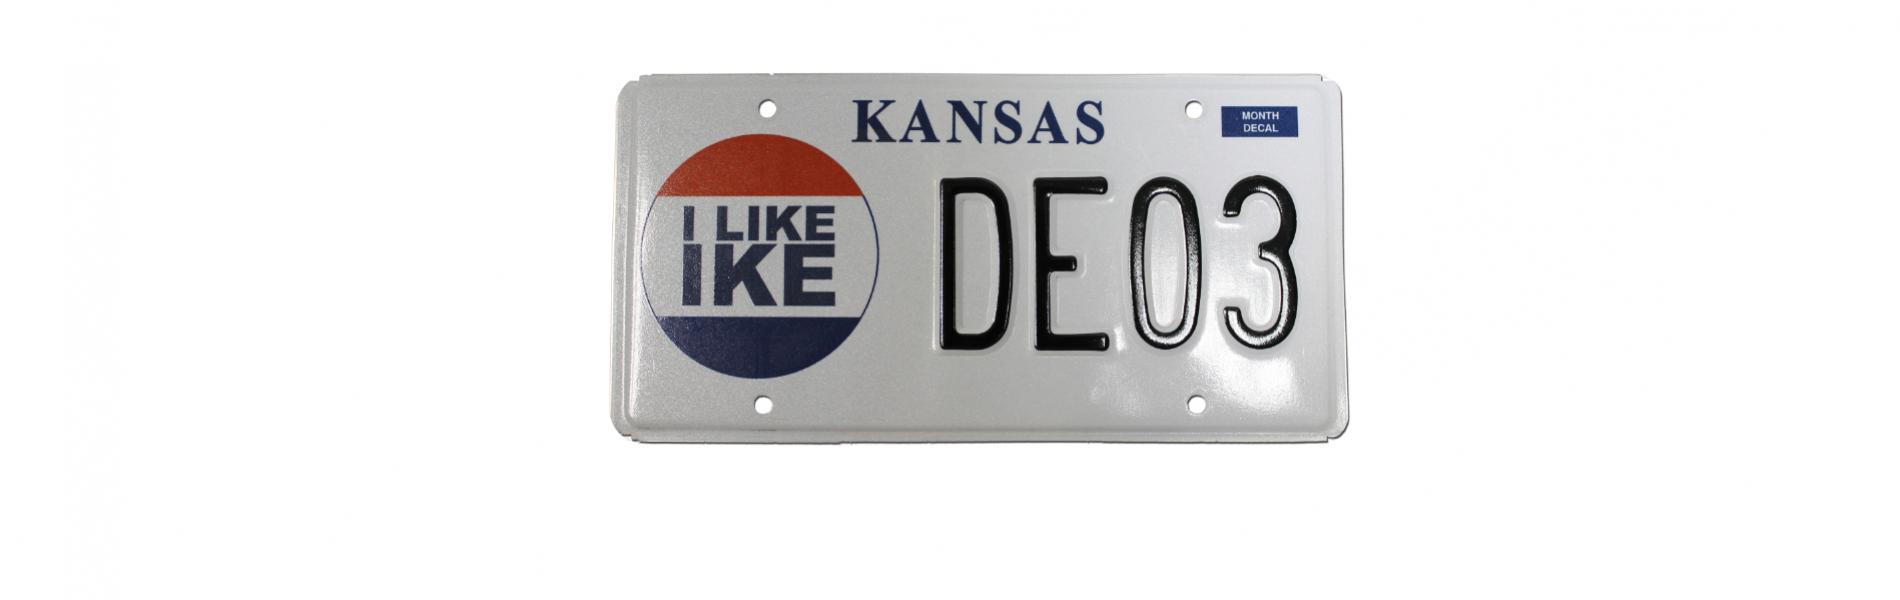 I Like Ike license plate